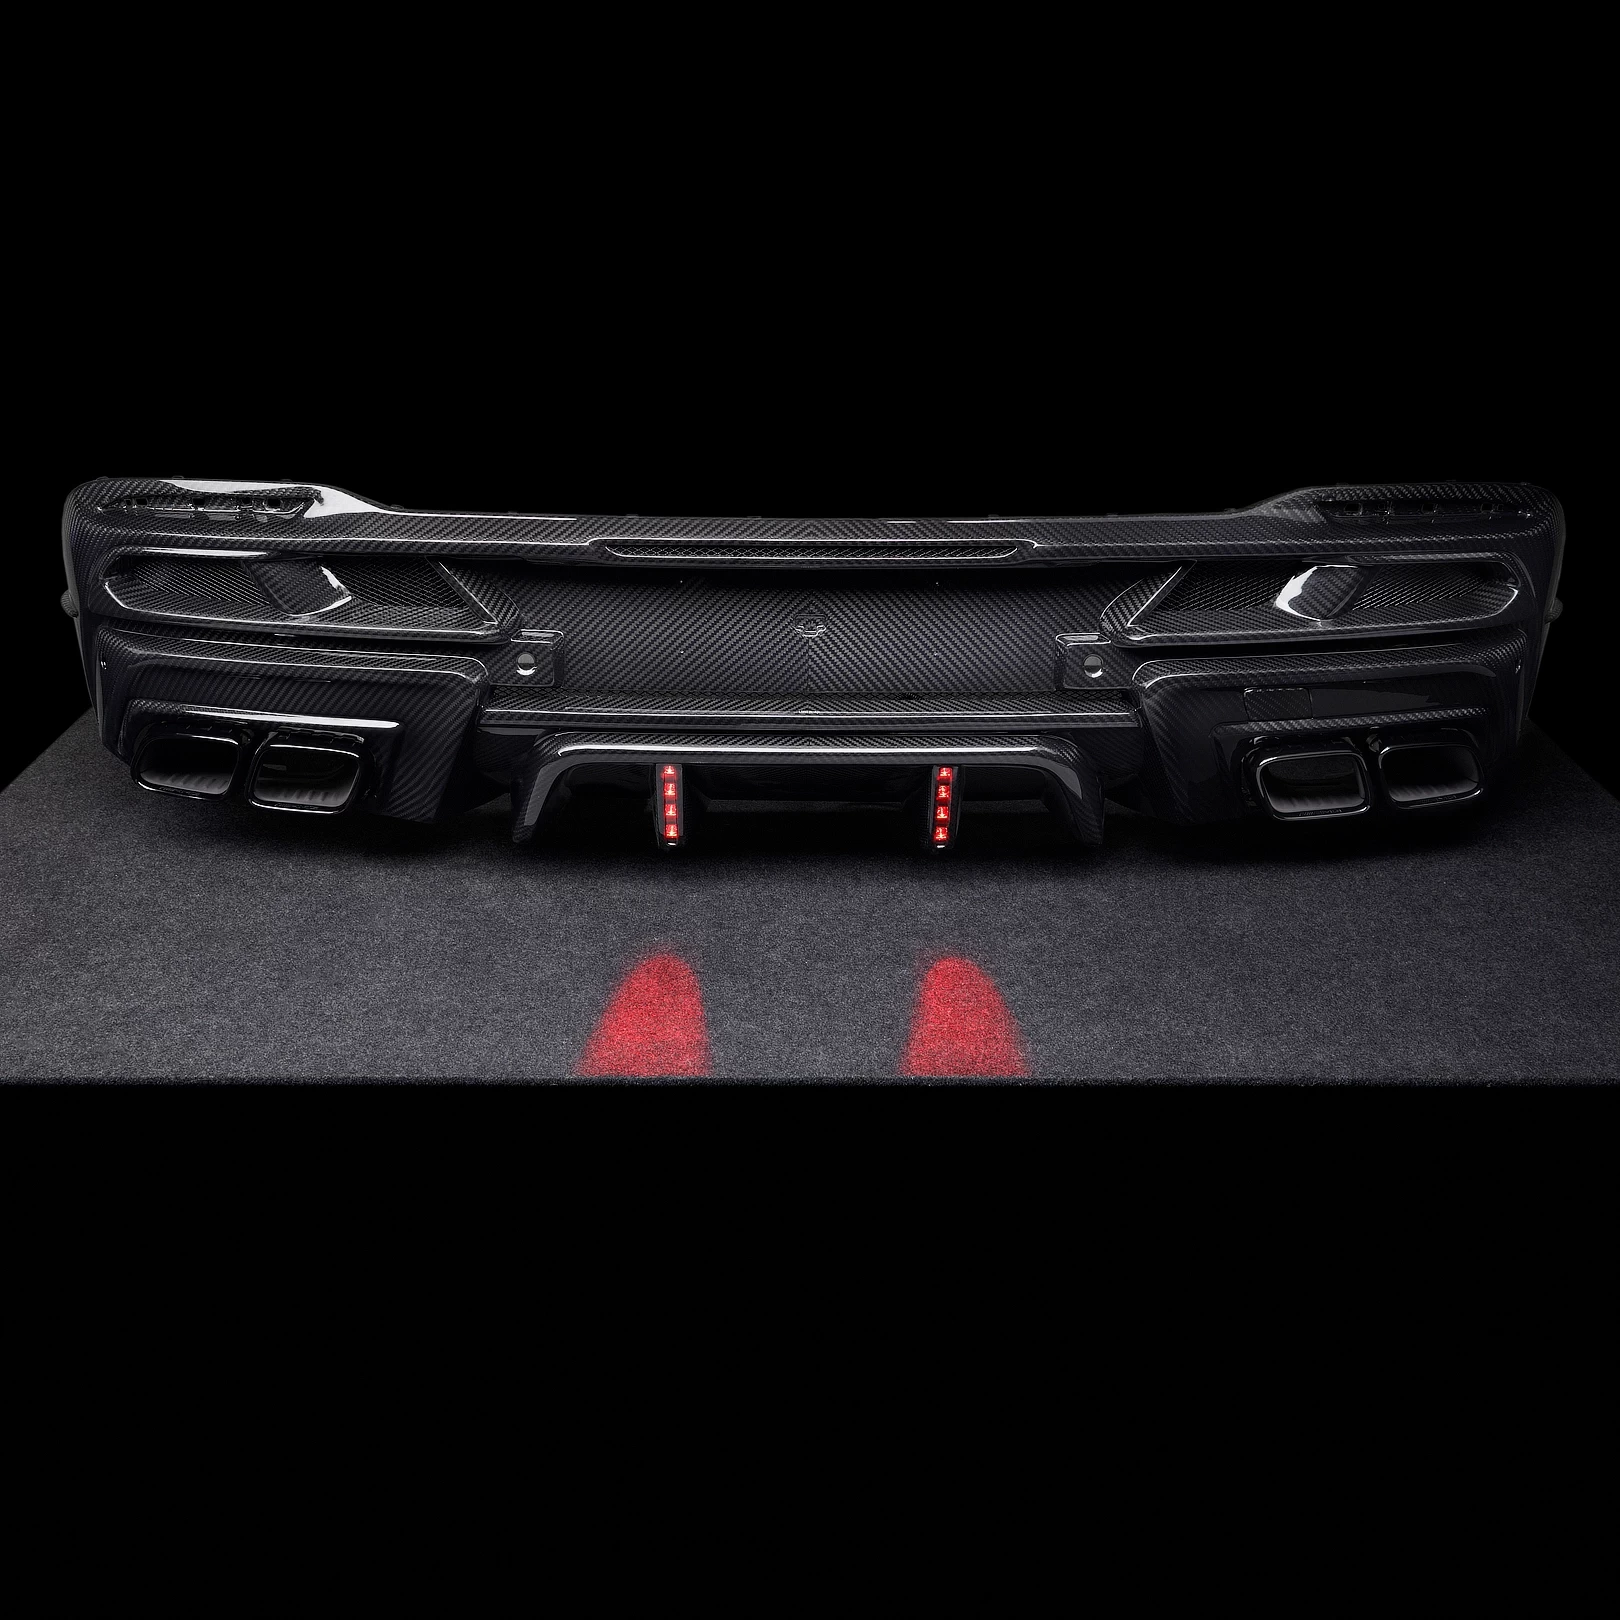 Tuning kits Addon diffuser for Mercedes Benz AMG GLE Coupe 63 S 4MATIC+ C167 M 177 DE 40 AL